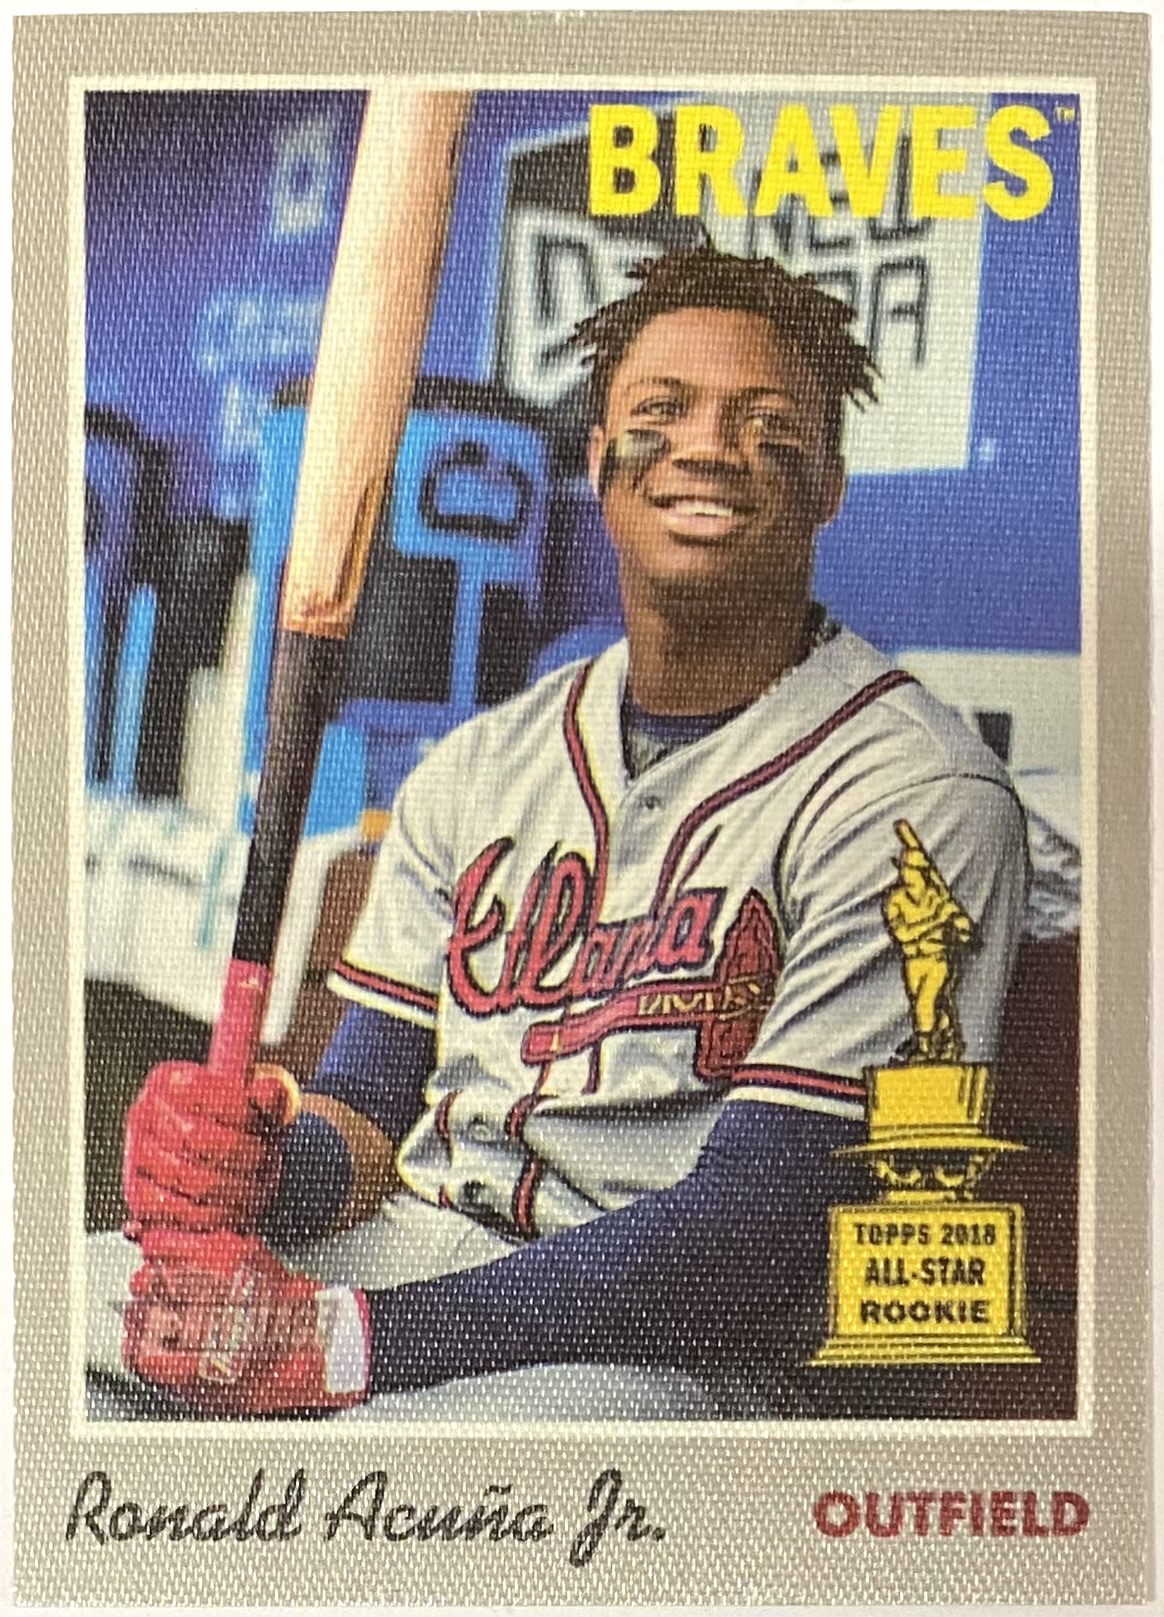 Ronald Acuna Jr. STICKER - Atlanta Braves MLB